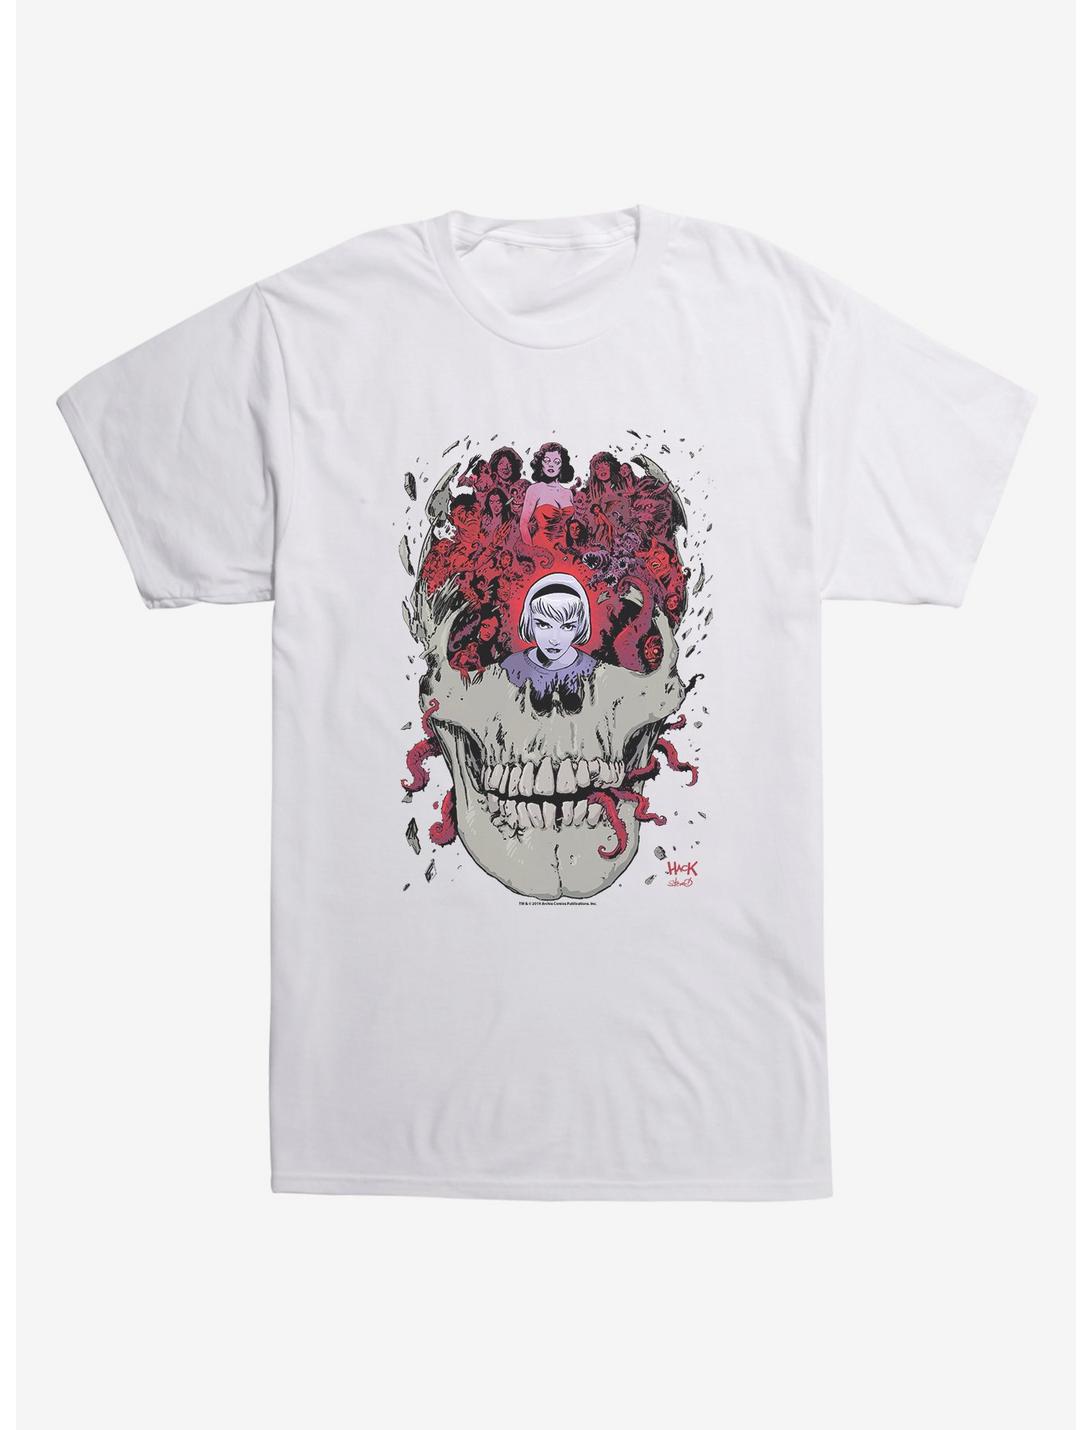 Chilling Adventures of Sabrina Skull T-Shirt, , hi-res